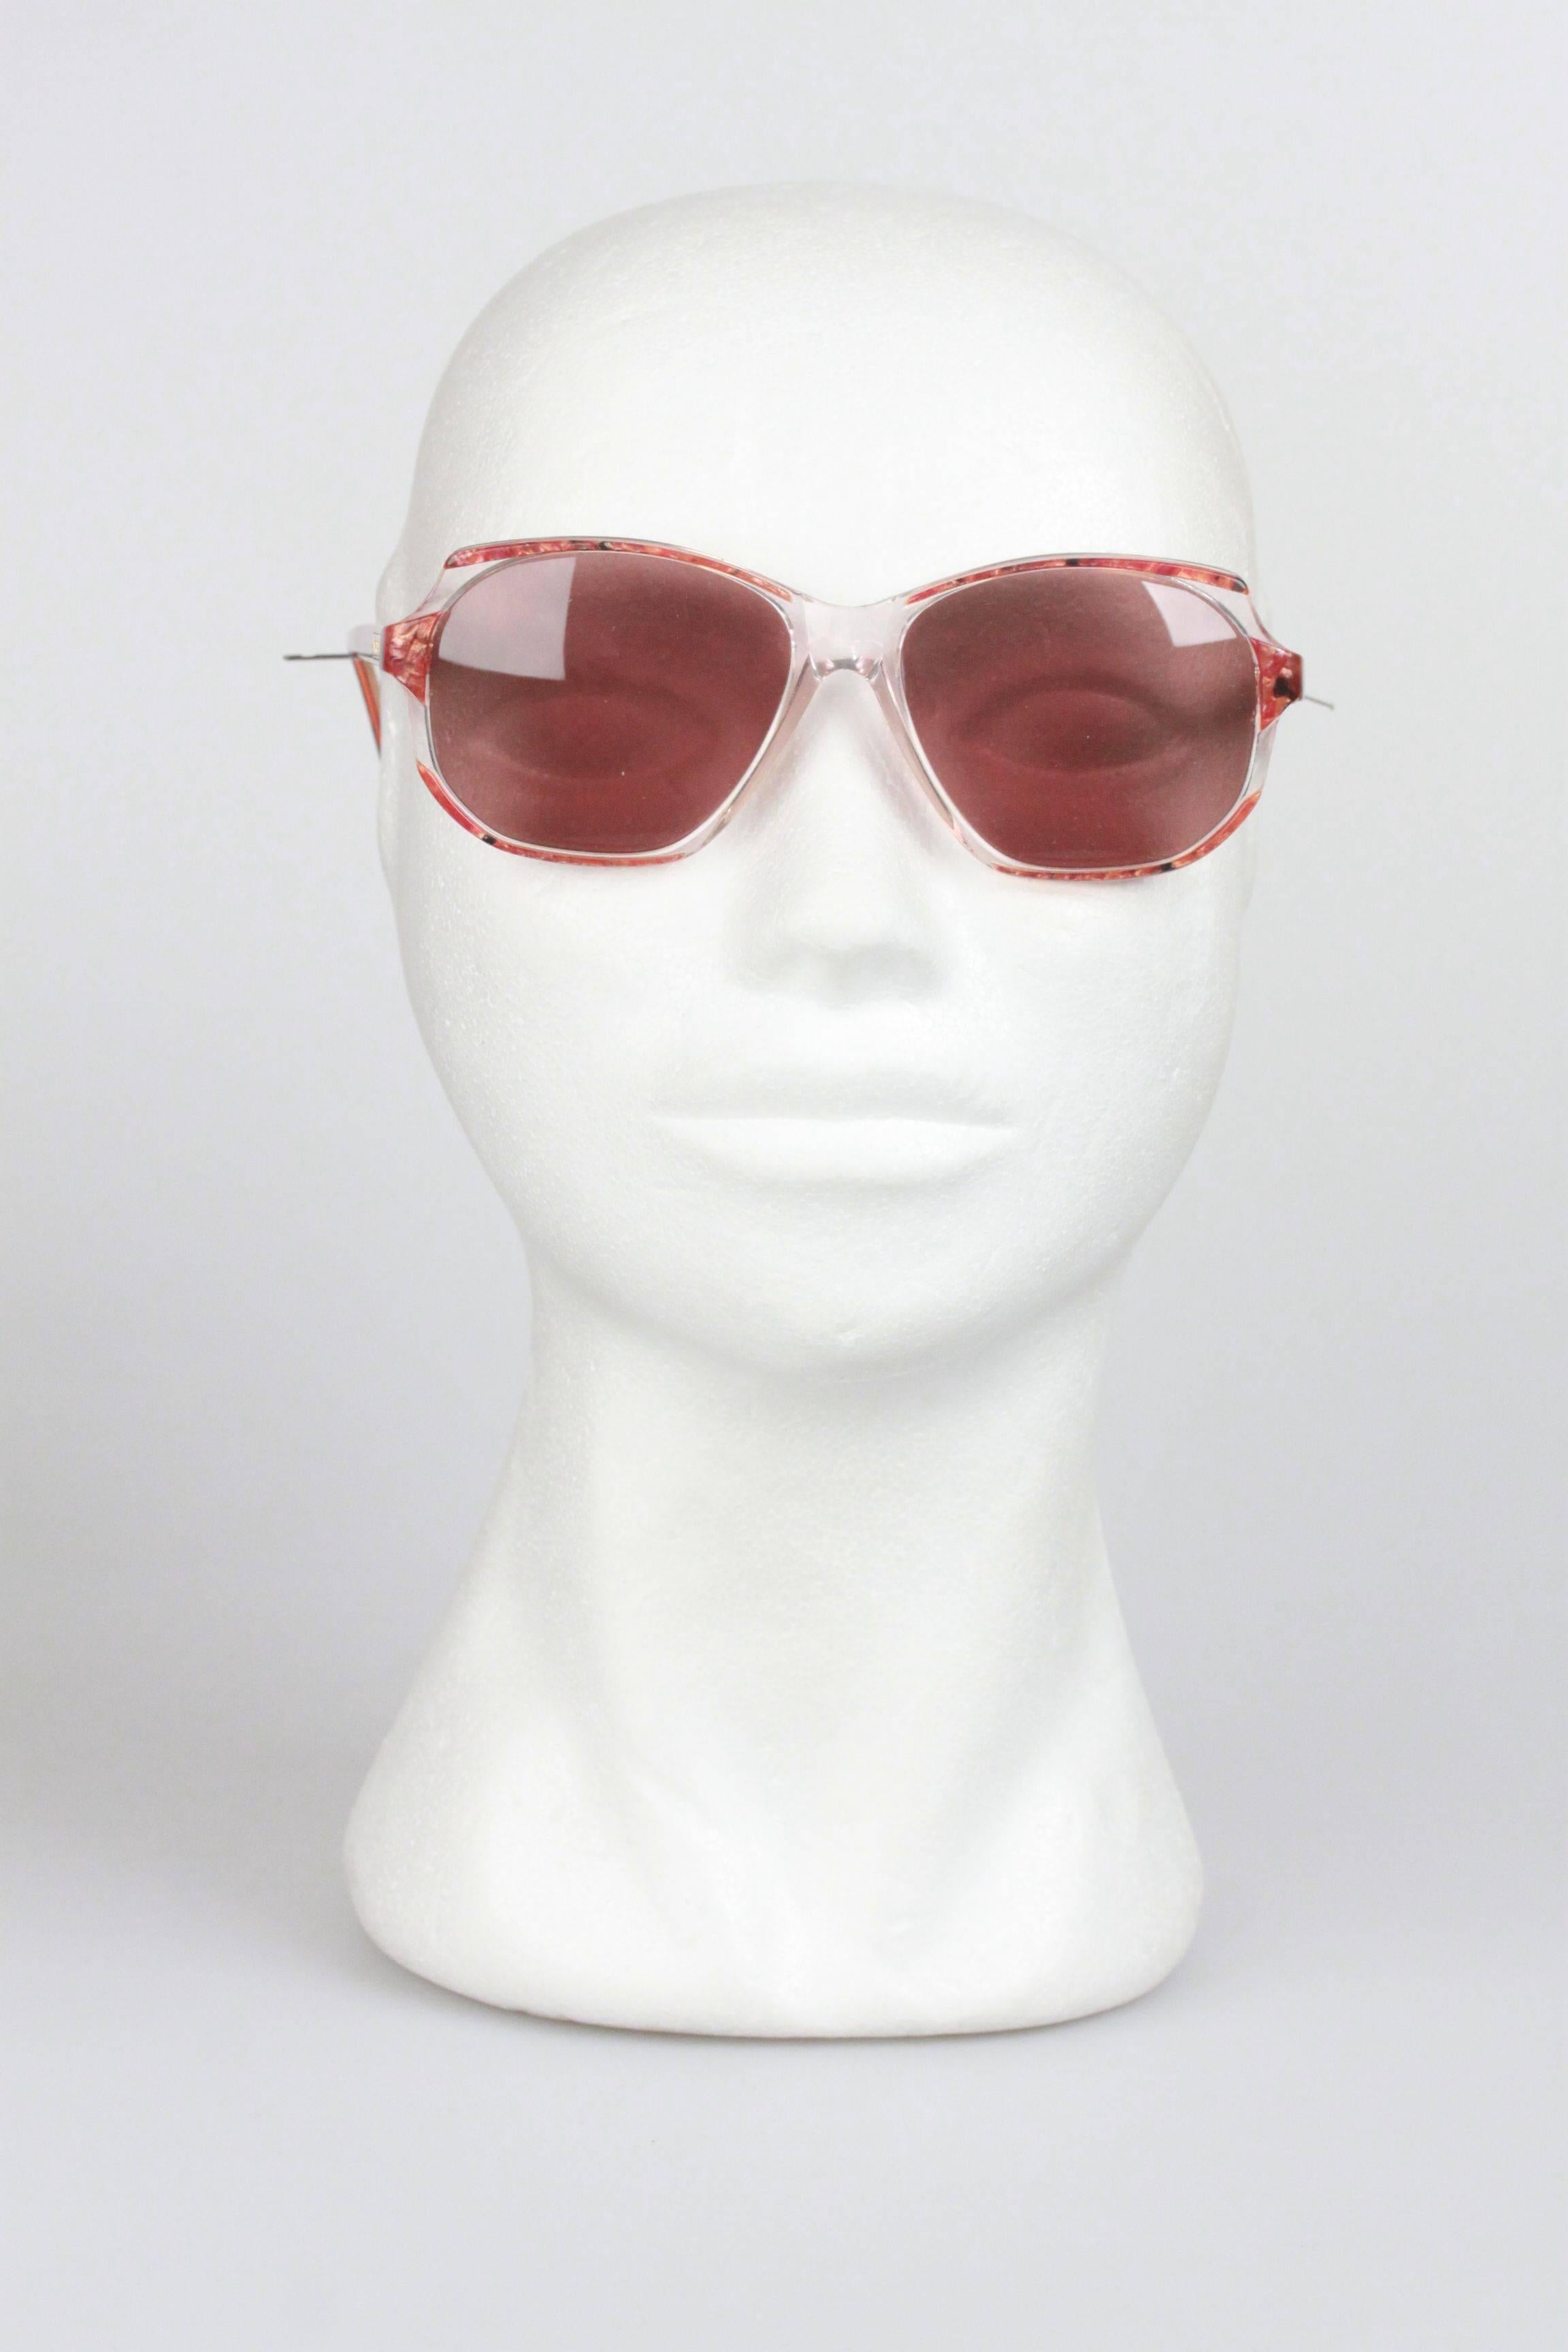 YVES SAINT LAURENT Vintage Marbled RED MINT Sunglasses NAXOS 825 56mm 5